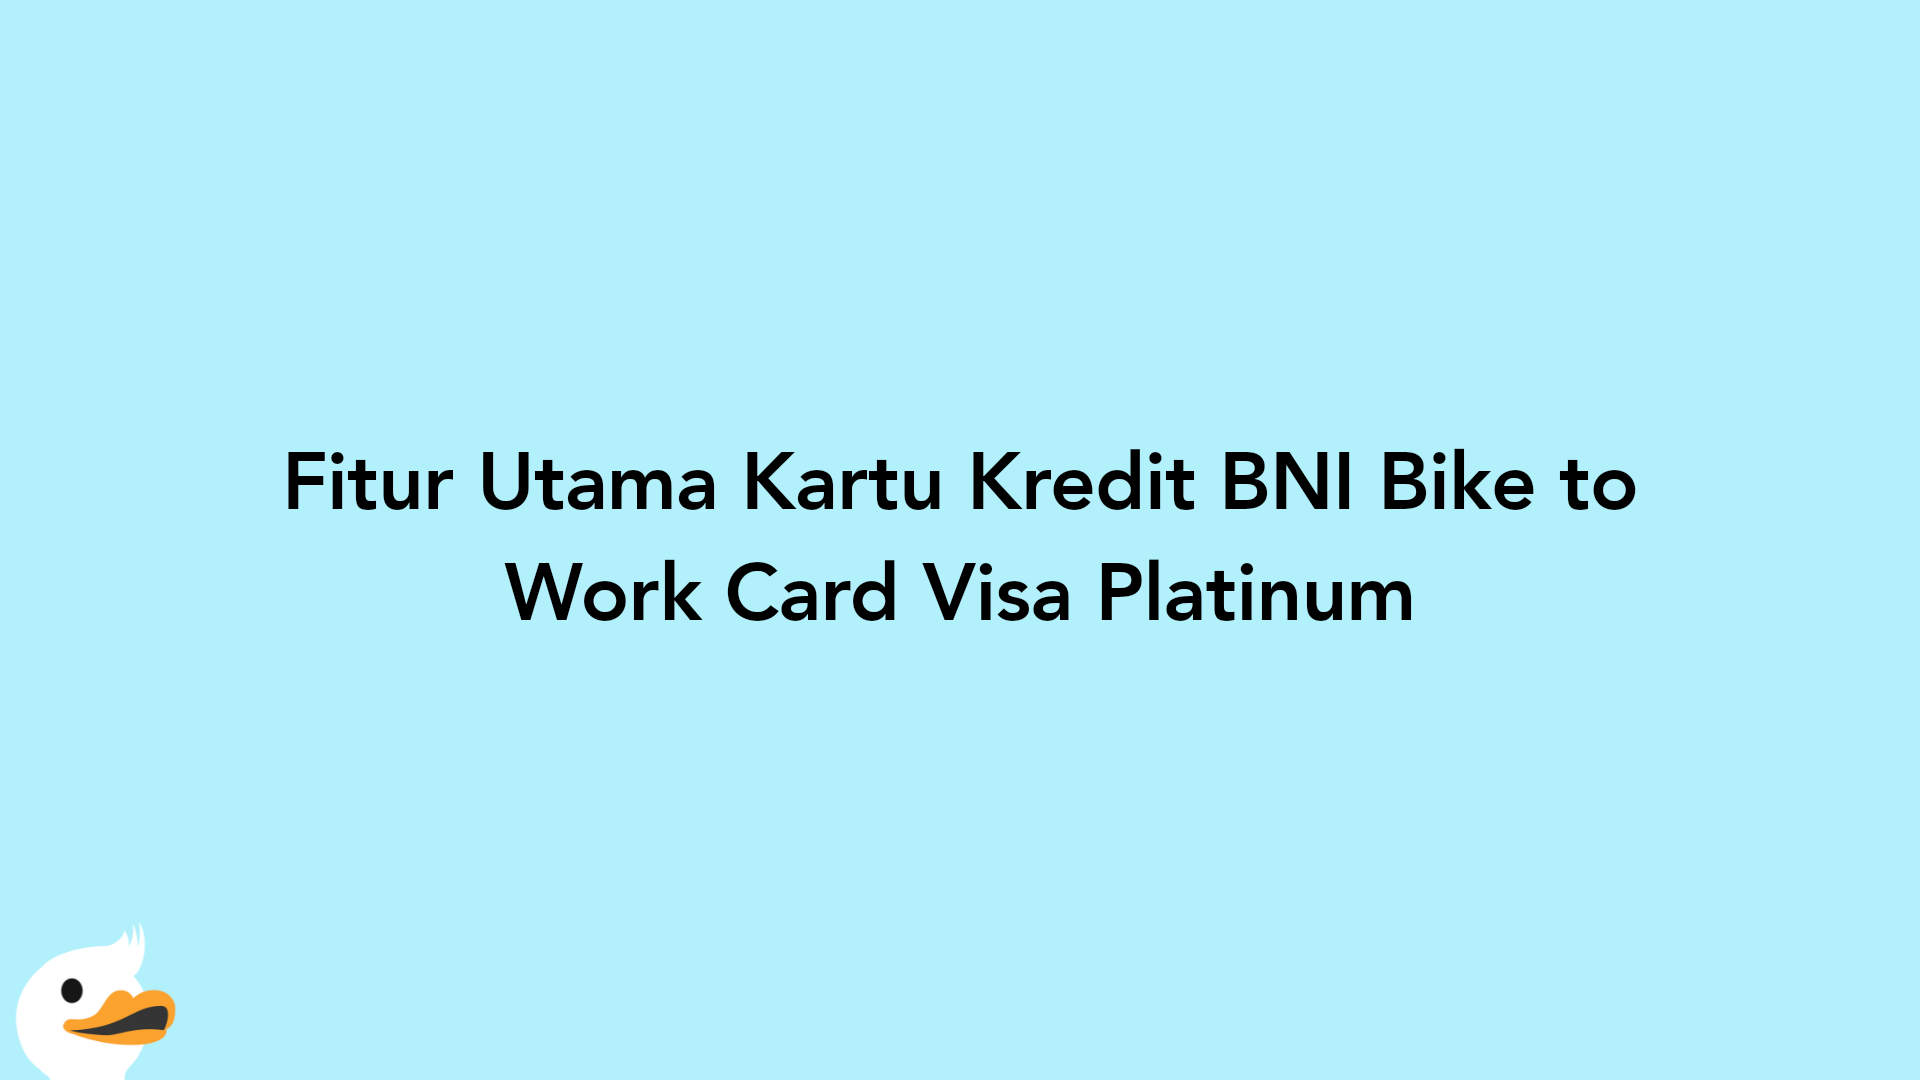 Fitur Utama Kartu Kredit BNI Bike to Work Card Visa Platinum